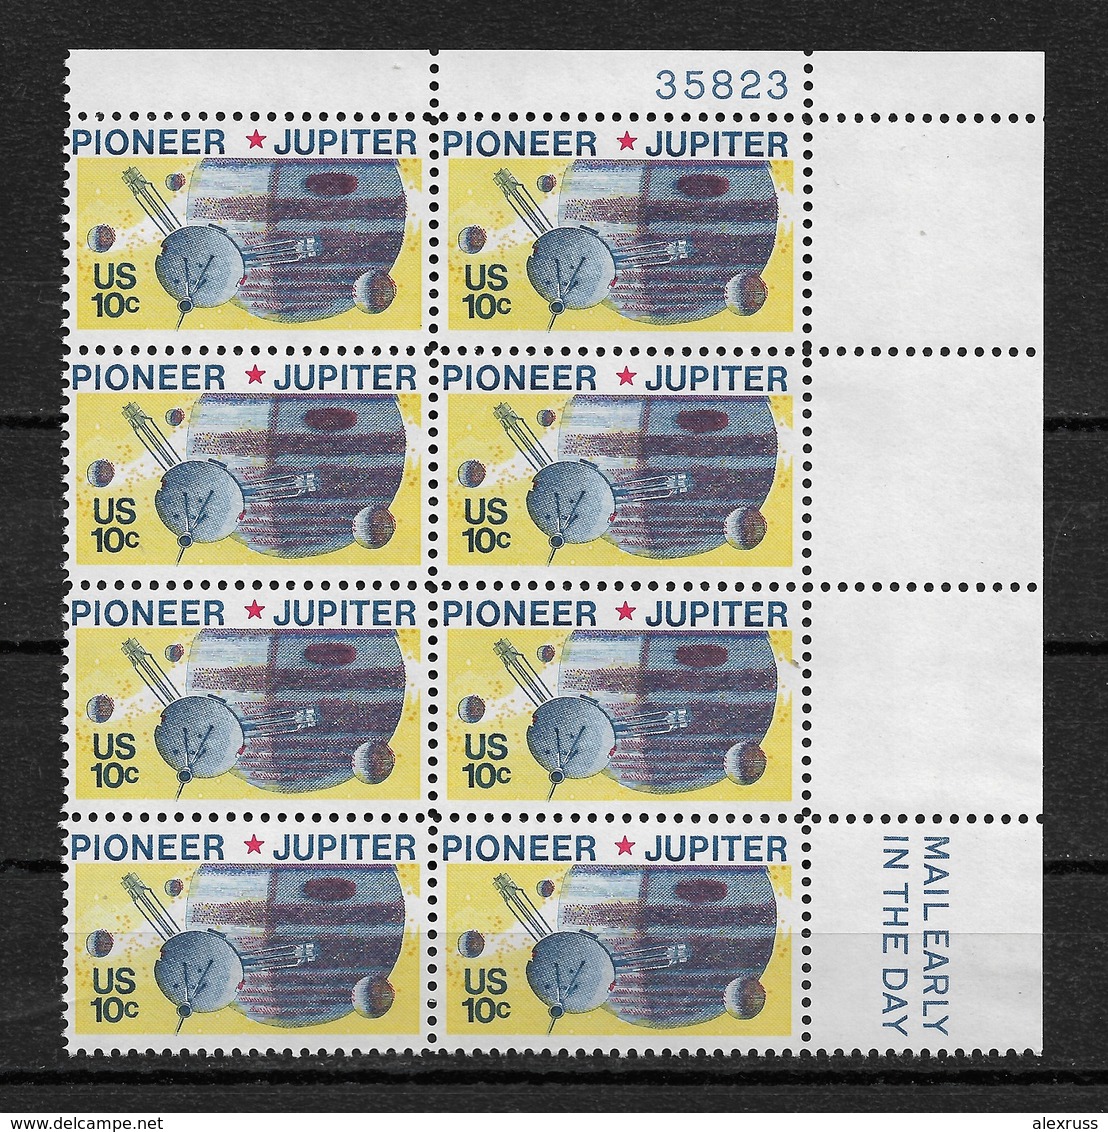 US 1975 SPACE PIONEER JUPITER PLATE BLOCK OF 8 SCOTT 1556,VF-XF MNH** - Plate Blocks & Sheetlets